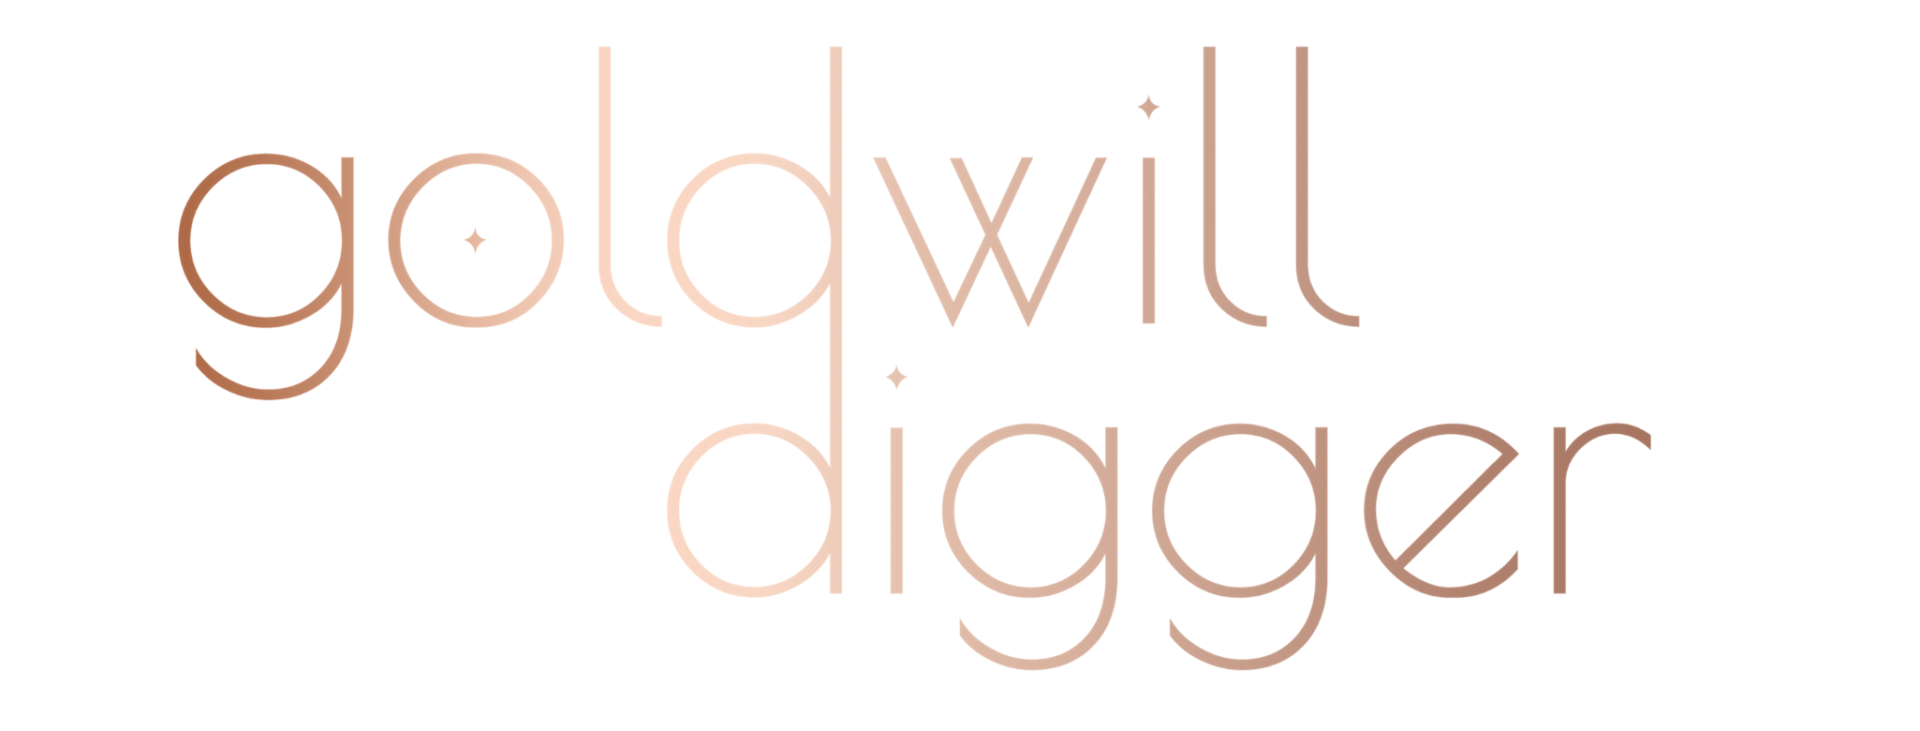 Goldwill Digger